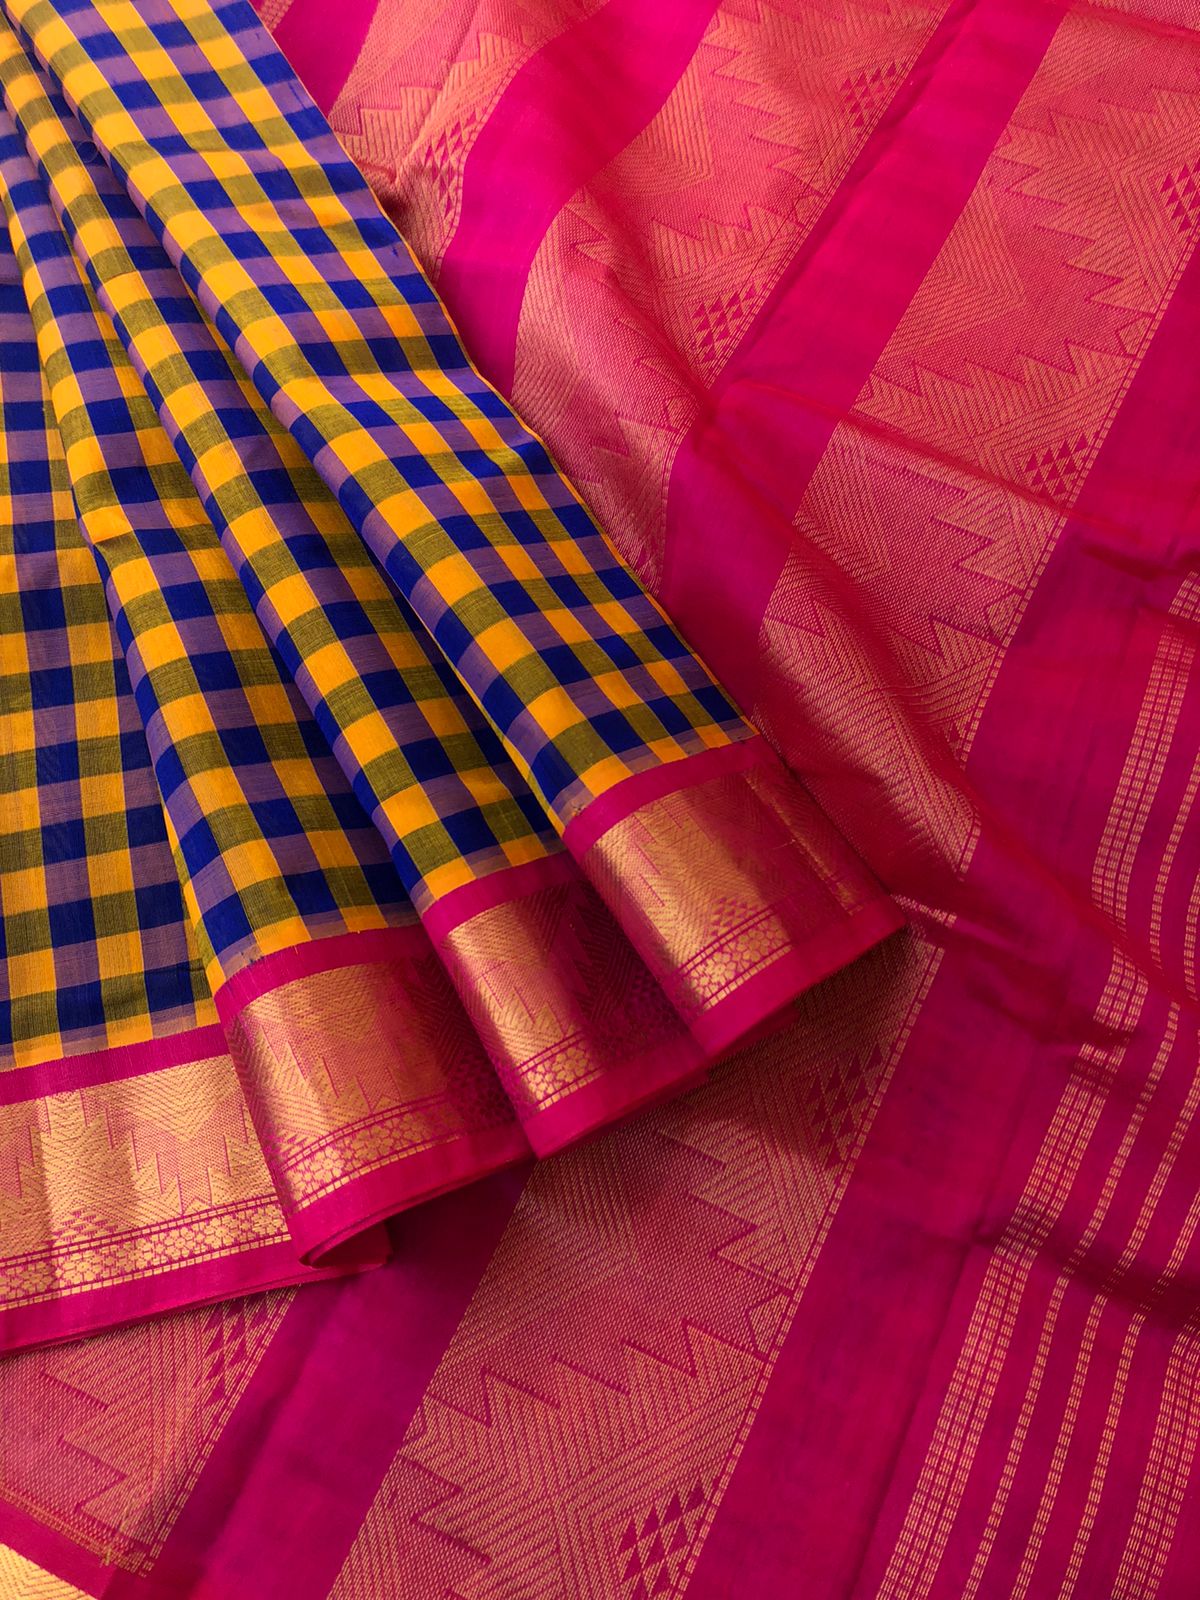 Paalum palamum kattam on Korvai Silk Cotton - mustard and blue chex with pink pallu and blouse